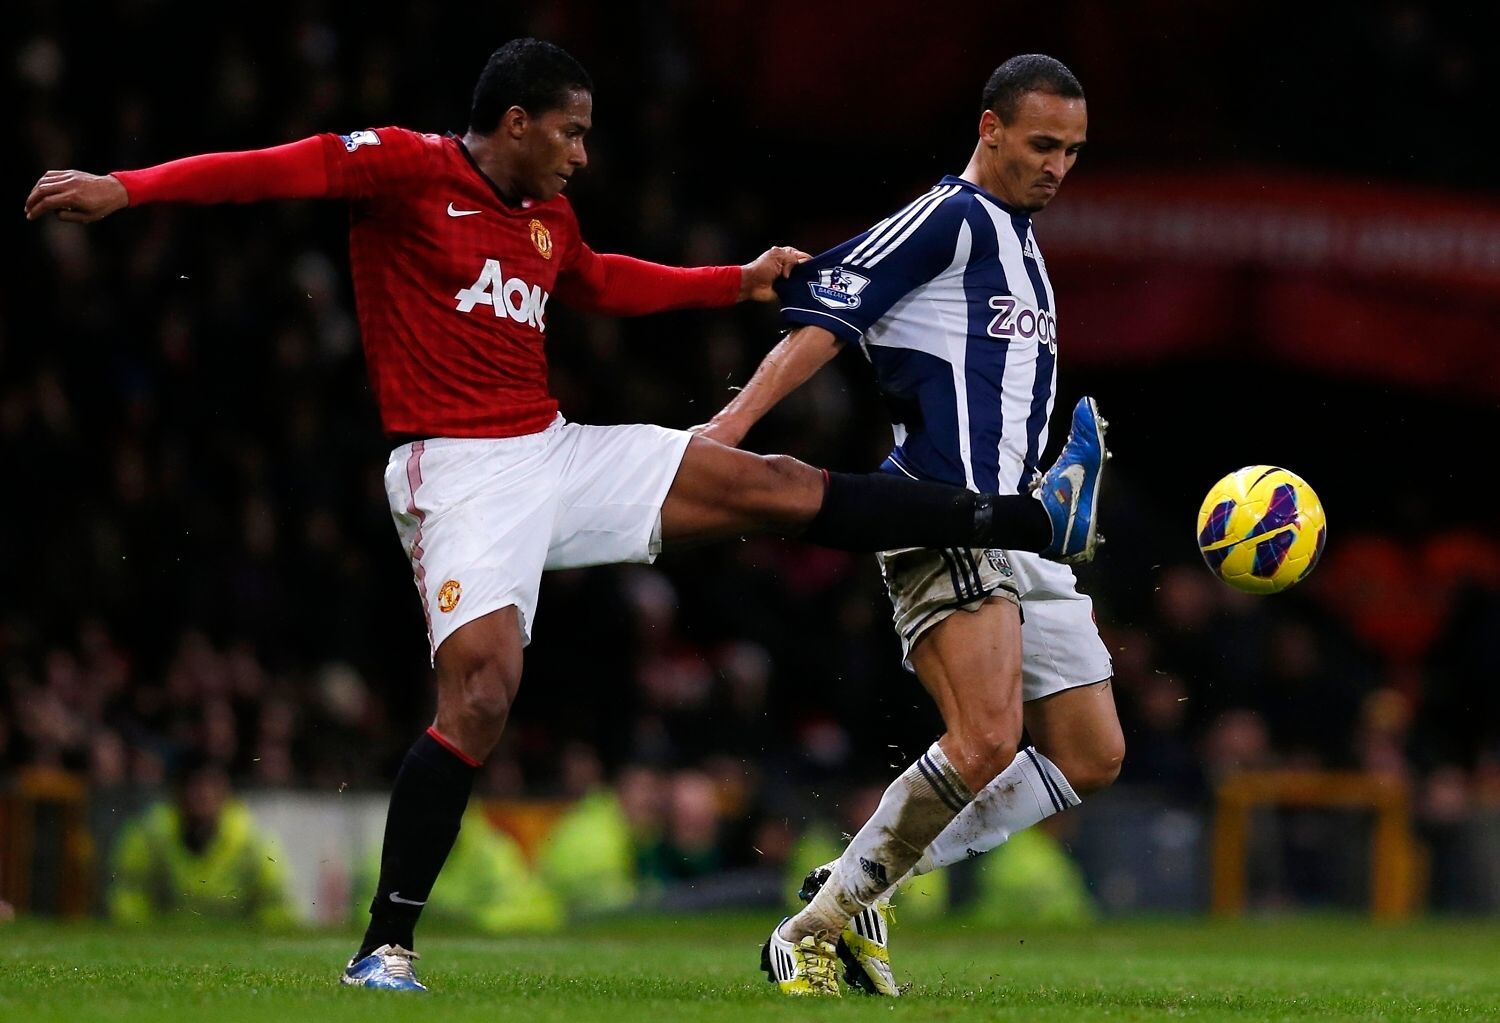 Premier League, Manchester United - West Bromwich: Antonio Valencia - Peter Odemwingie